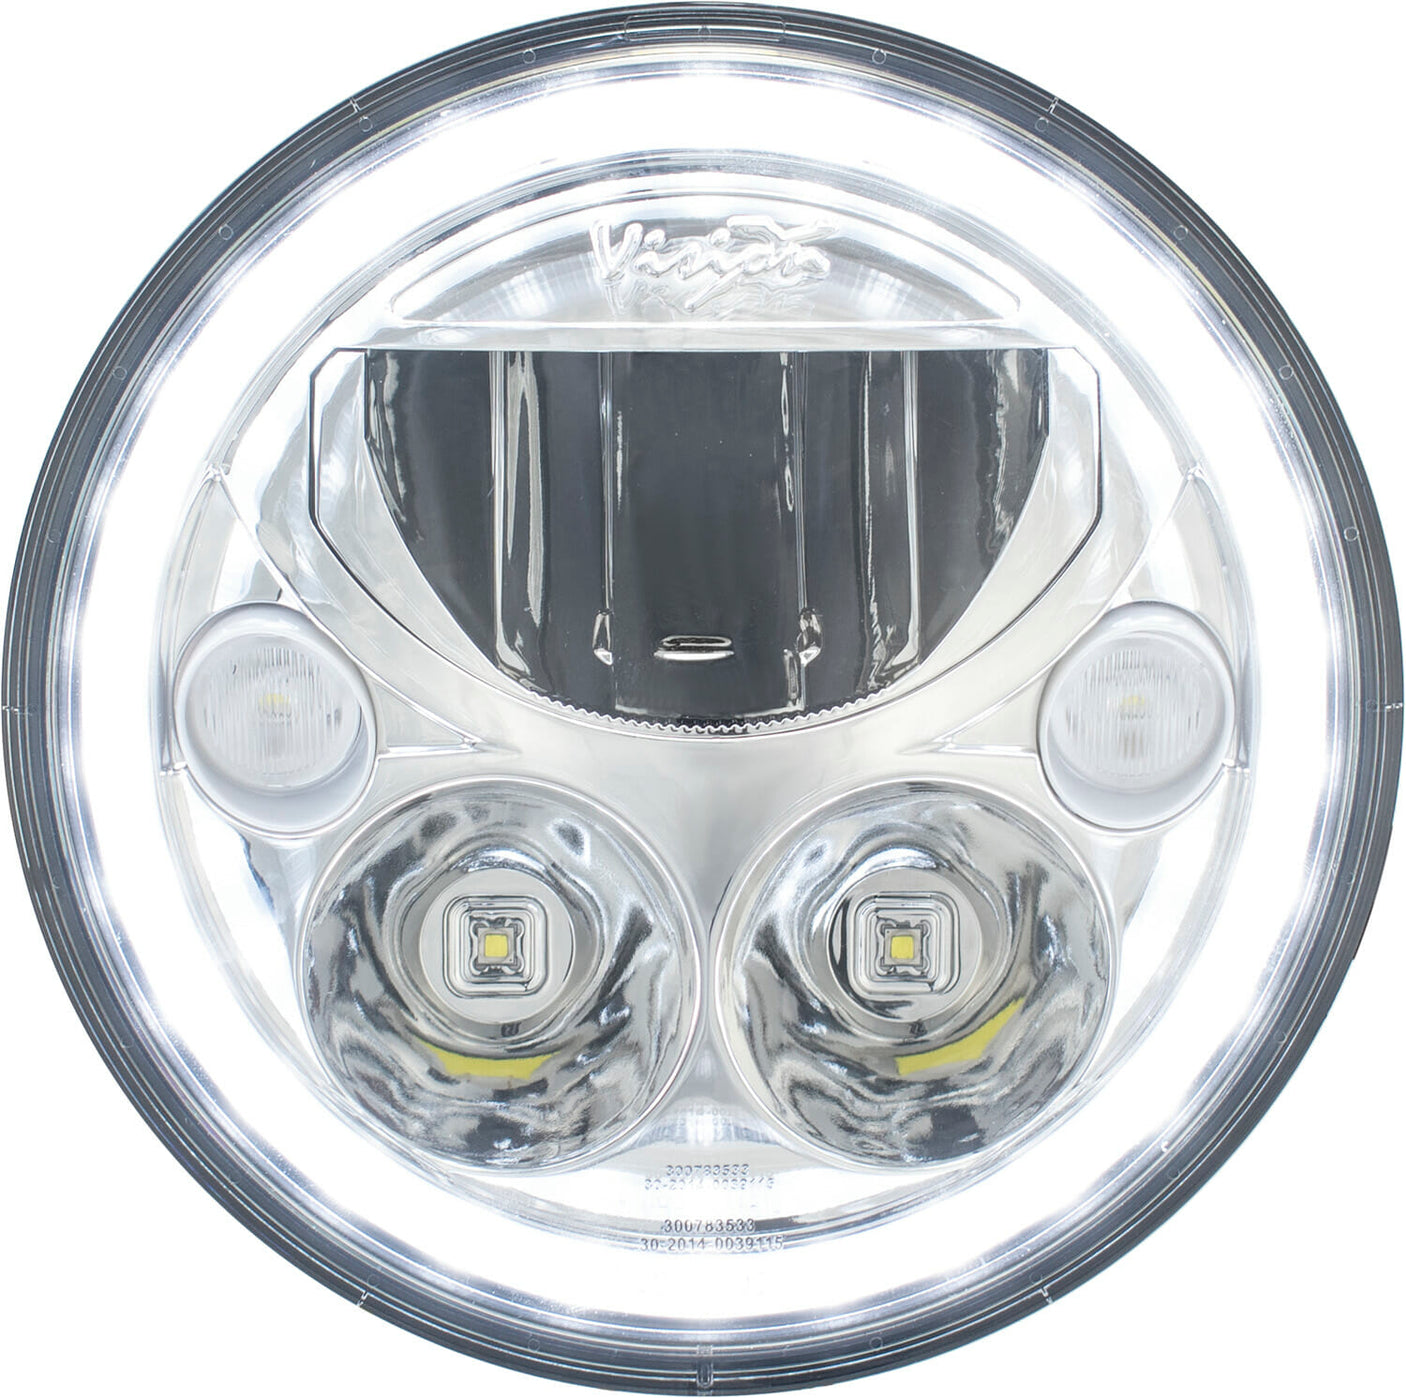 XMC 7" LED Headlight by Vision X